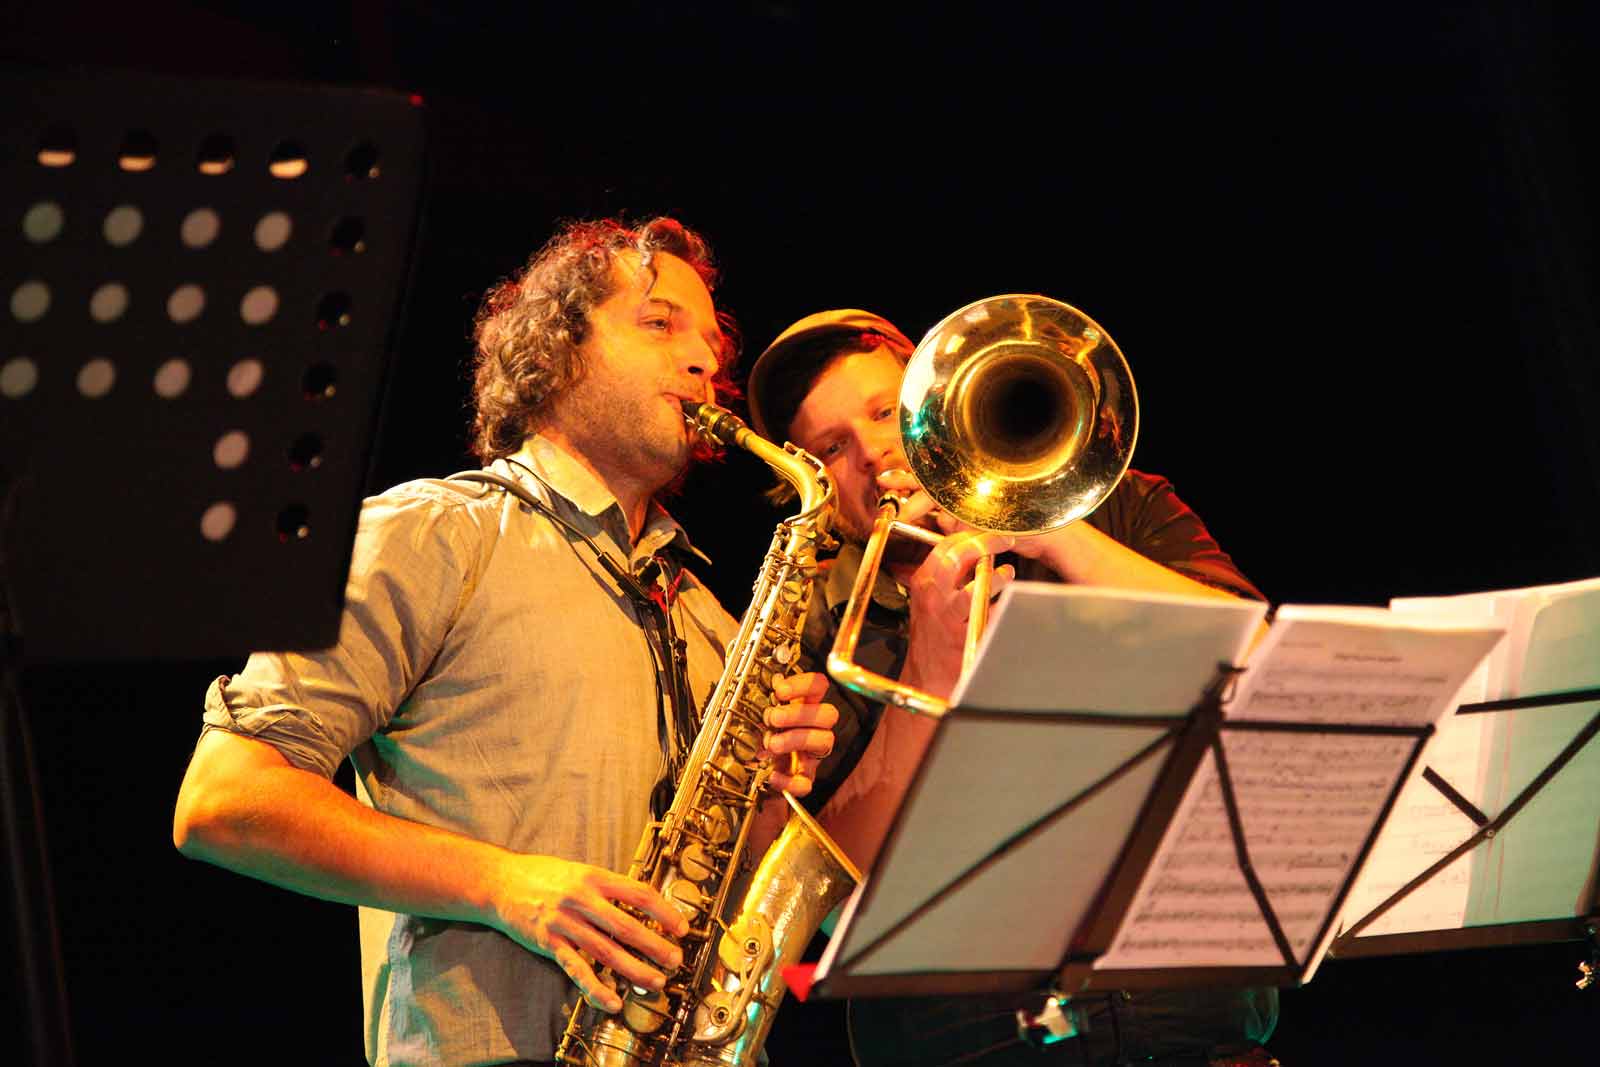 Petr Kalfus and Jan Jirucha playing Points Septet at Jazz Goes To Town, Hradec Kralove, photo by Milos Salek